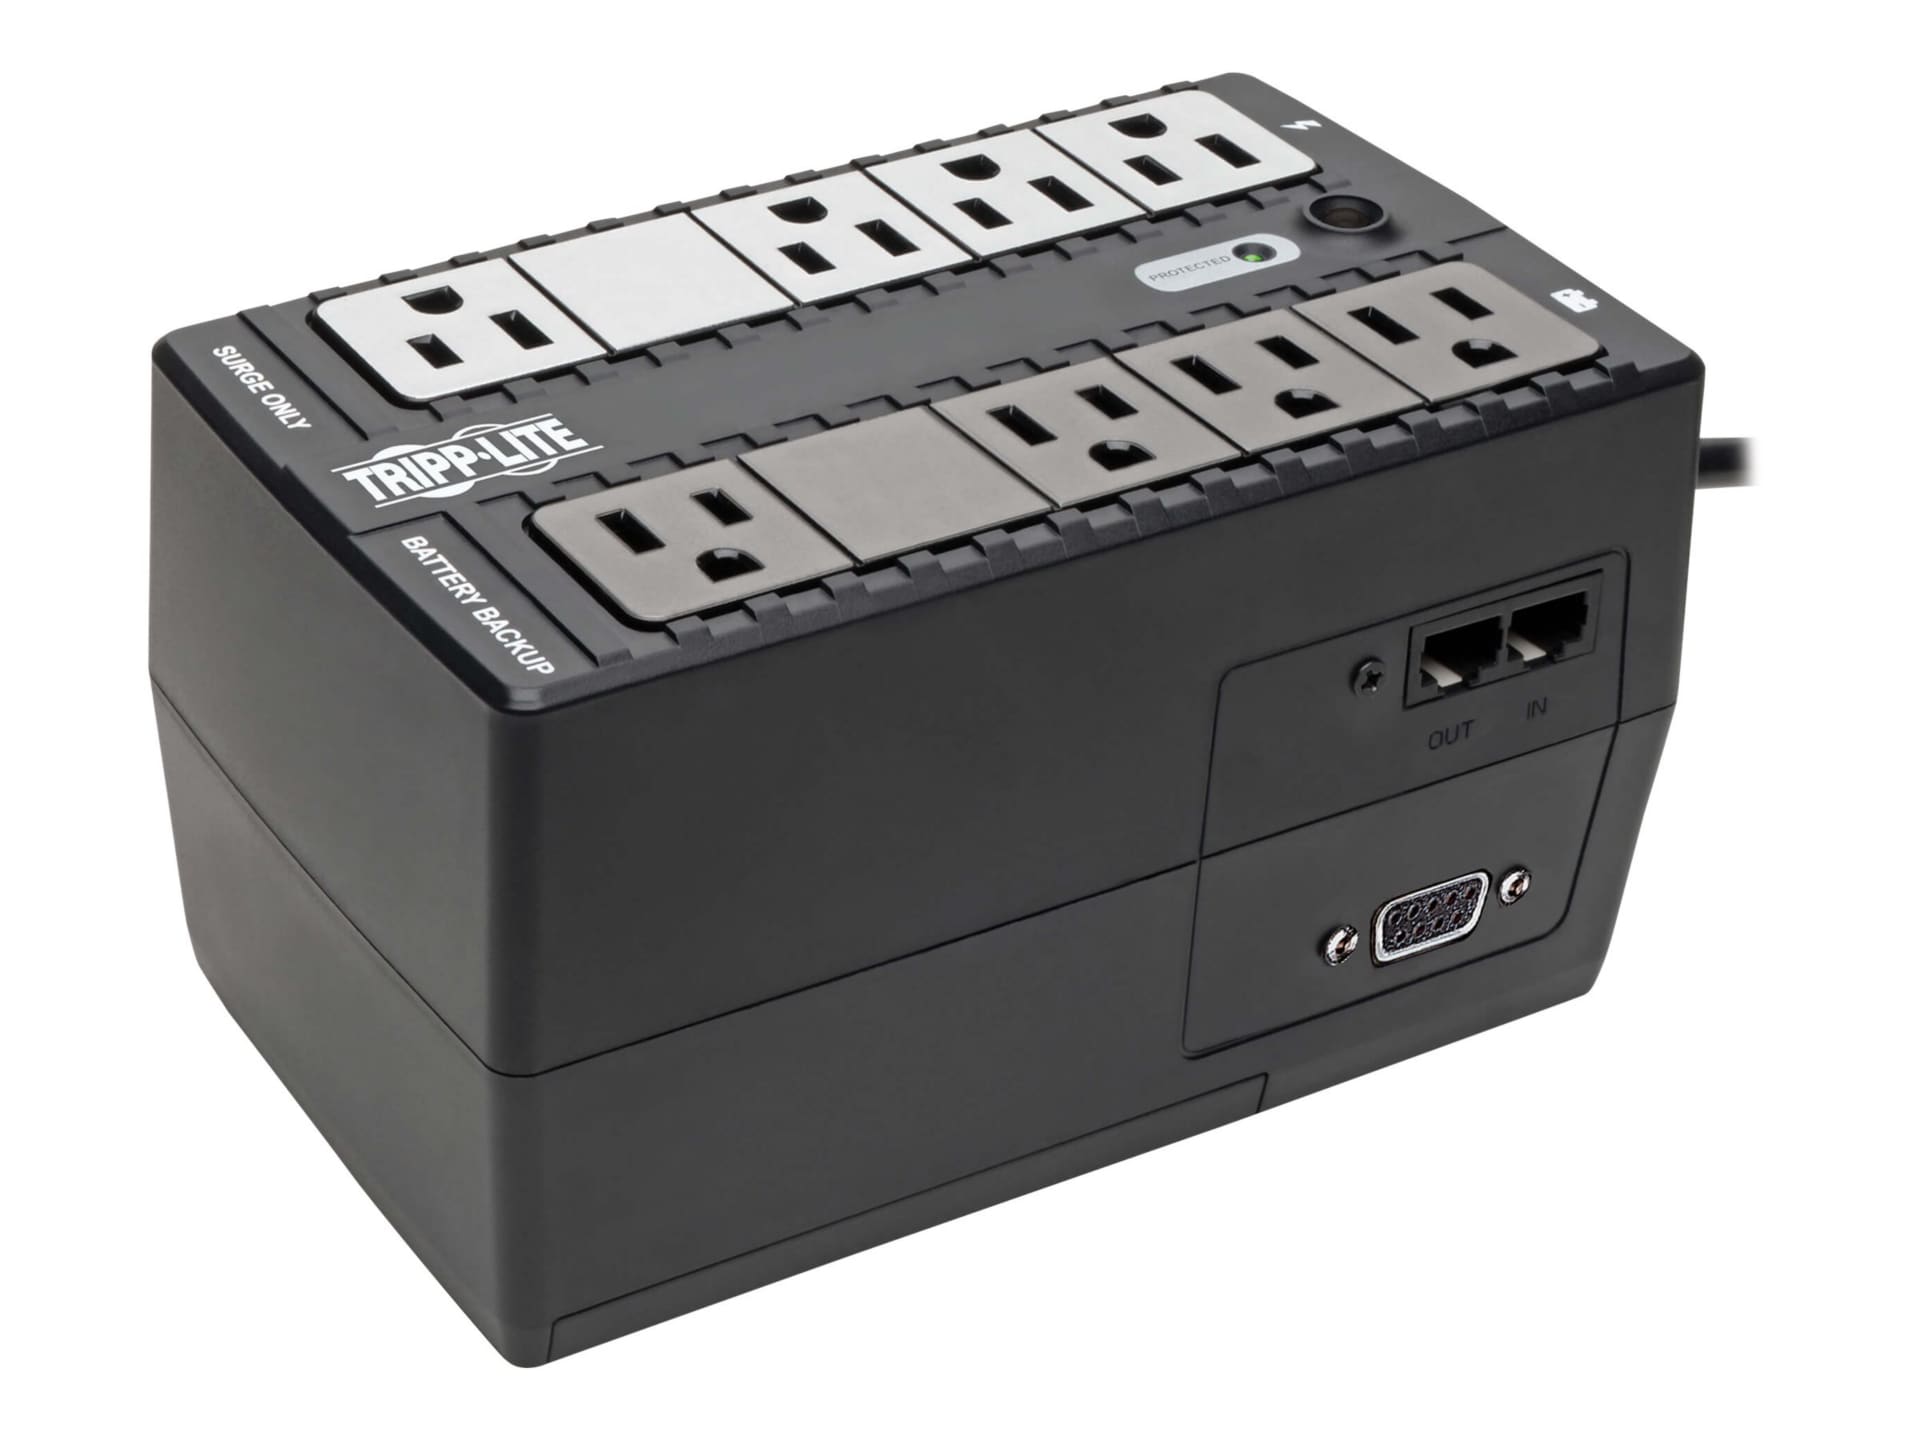 Tripp Lite UPS 550VA 300W Desktop Battery Back Up Compact 120V 50/60Hz DB9 RJ11 PC - onduleur - 300 Watt - 550 VA